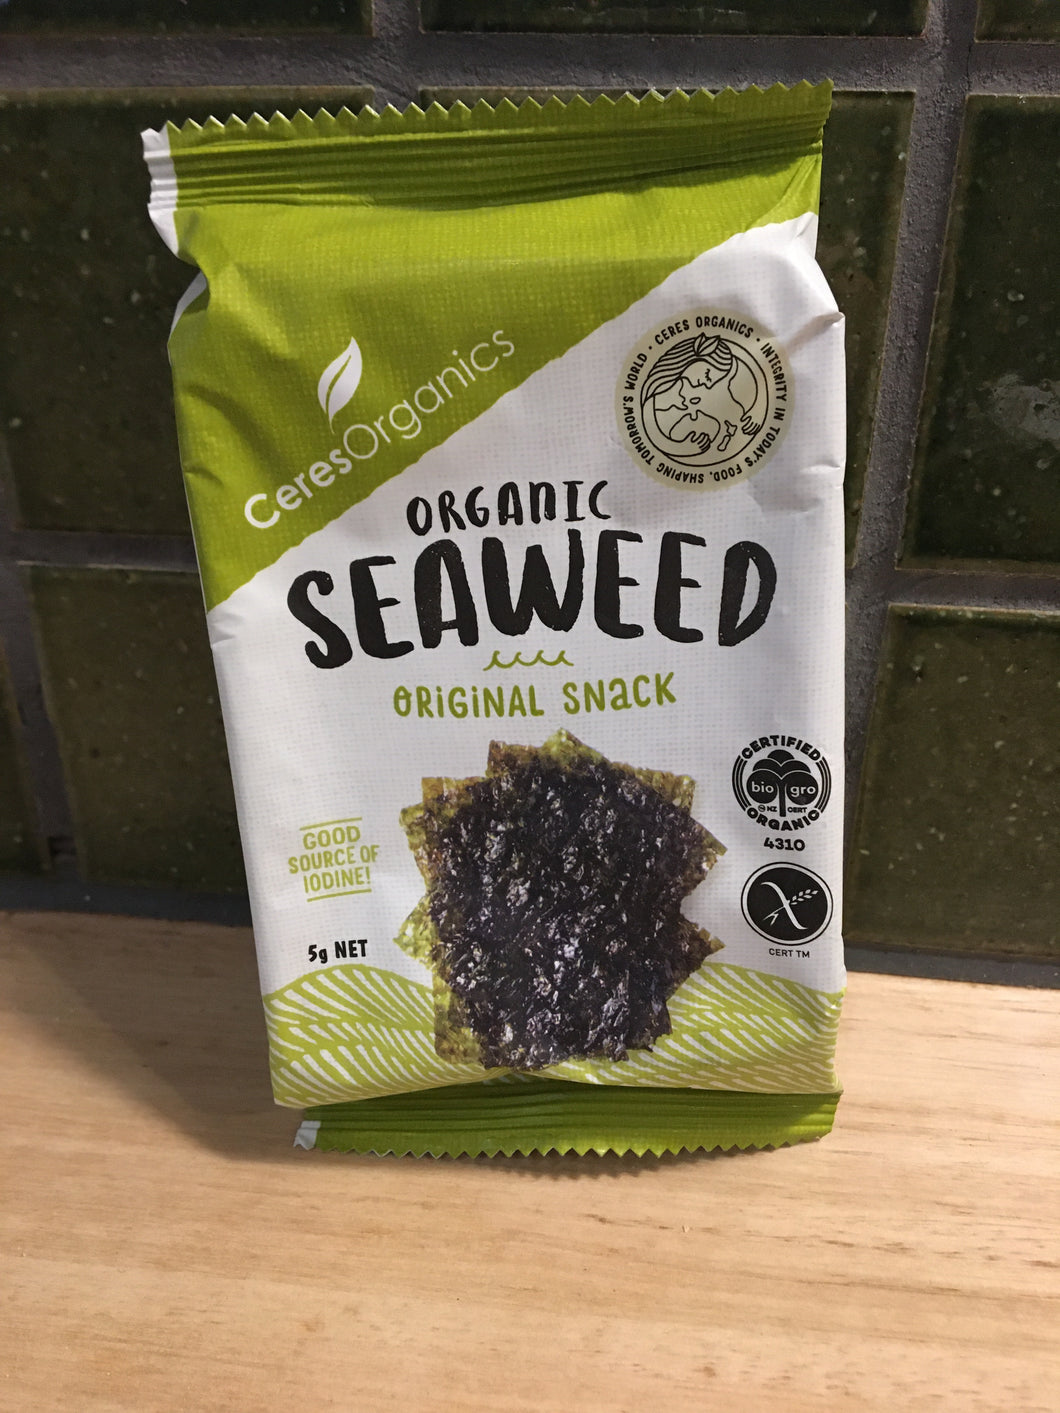 Ceres - Seaweed Snack Organic 5g Original